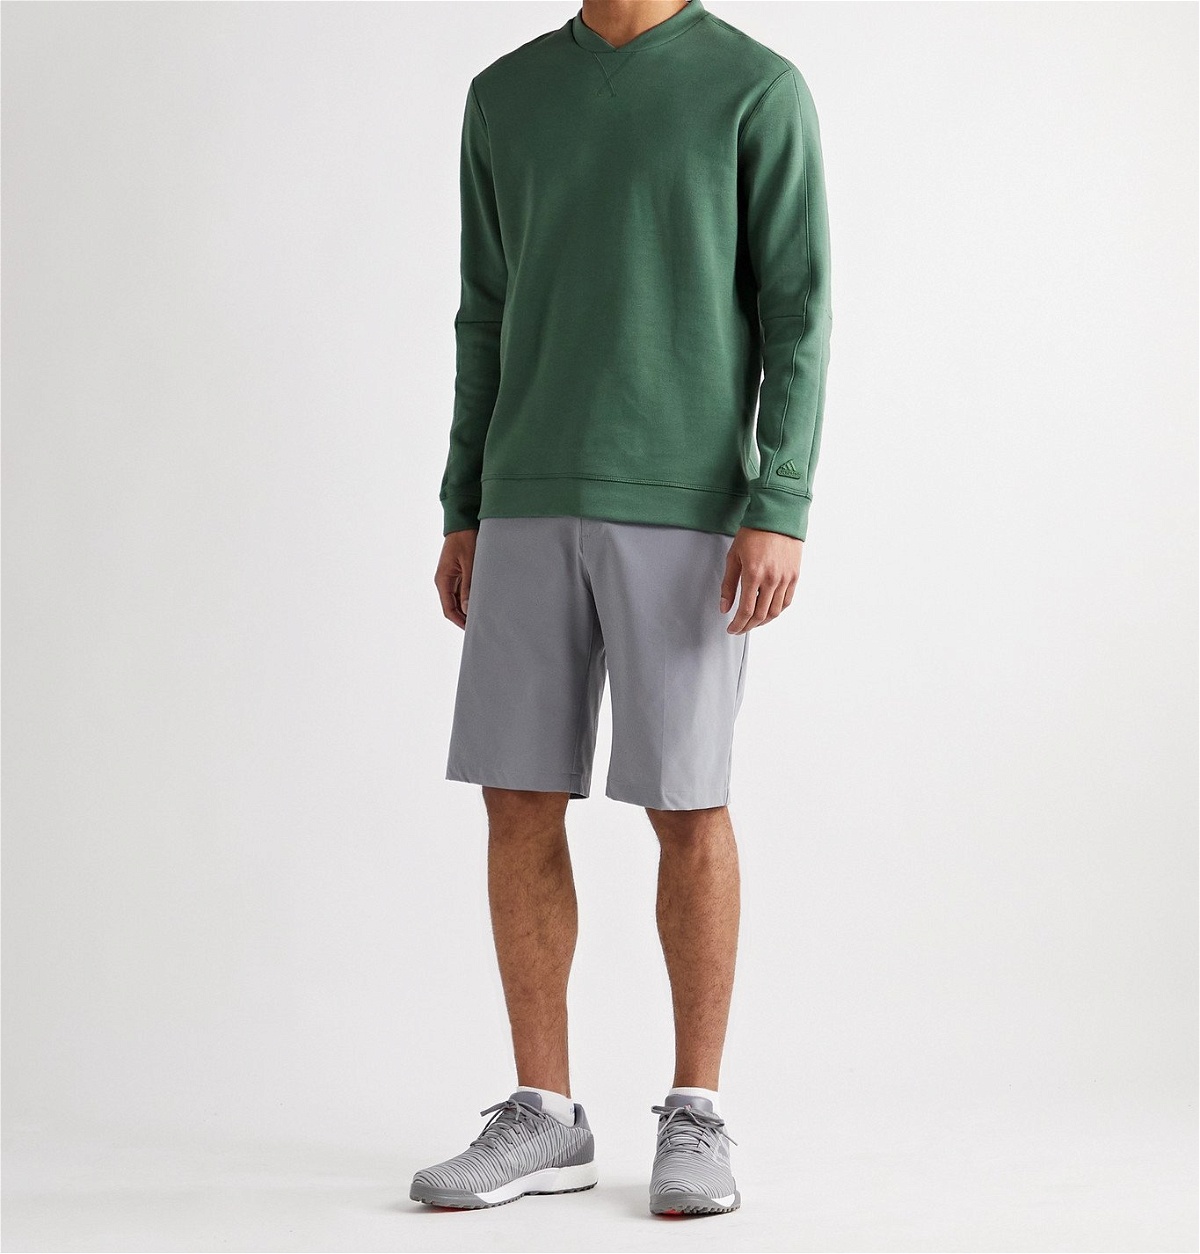 ADIDAS GOLF - Go-To Cotton-Blend Golf Sweatshirt - Green adidas Golf